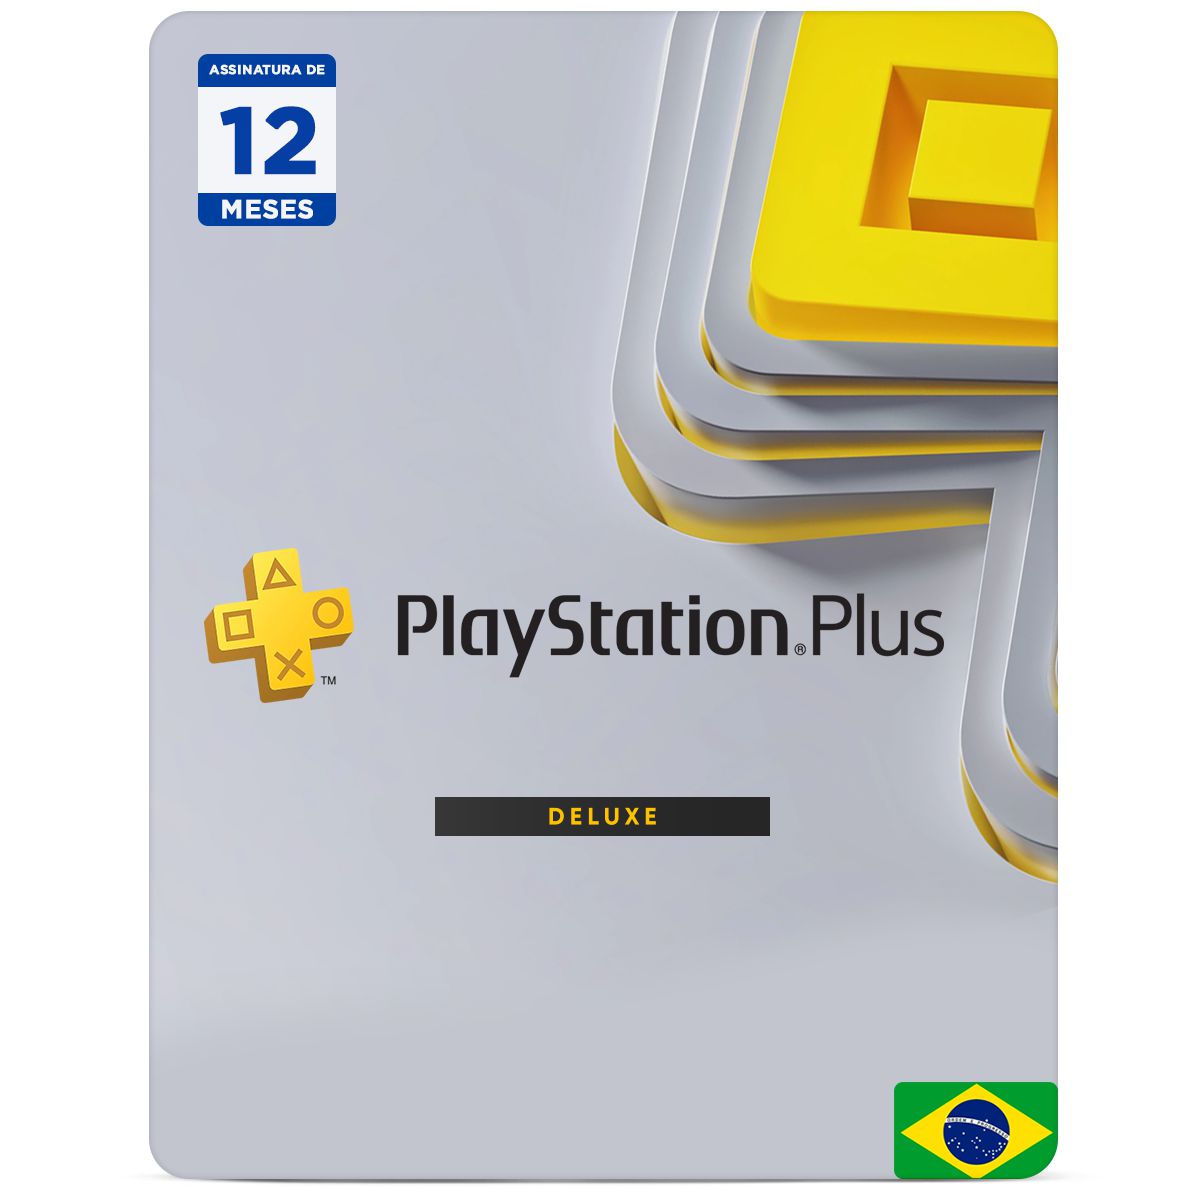 Playstation Plus Deluxe 12 Meses Assinatura Brasil - Código Digital -  PentaKill Store - Gift Card e Games